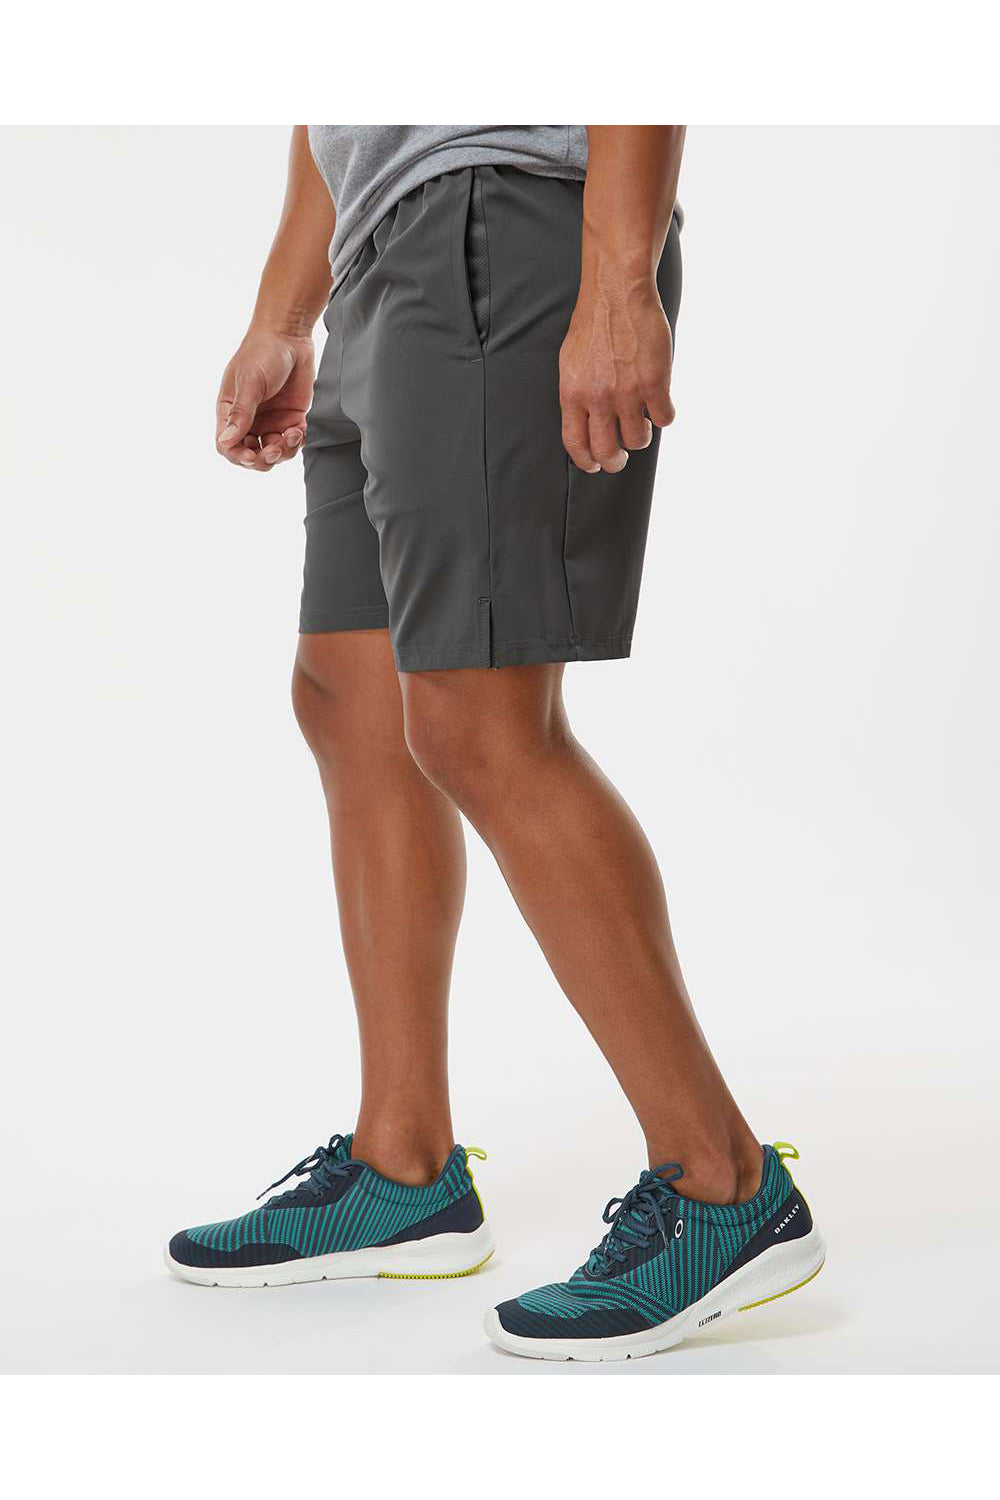 Holloway 229556 Mens Weld Shorts w/ Pockets Carbon Grey Model Side